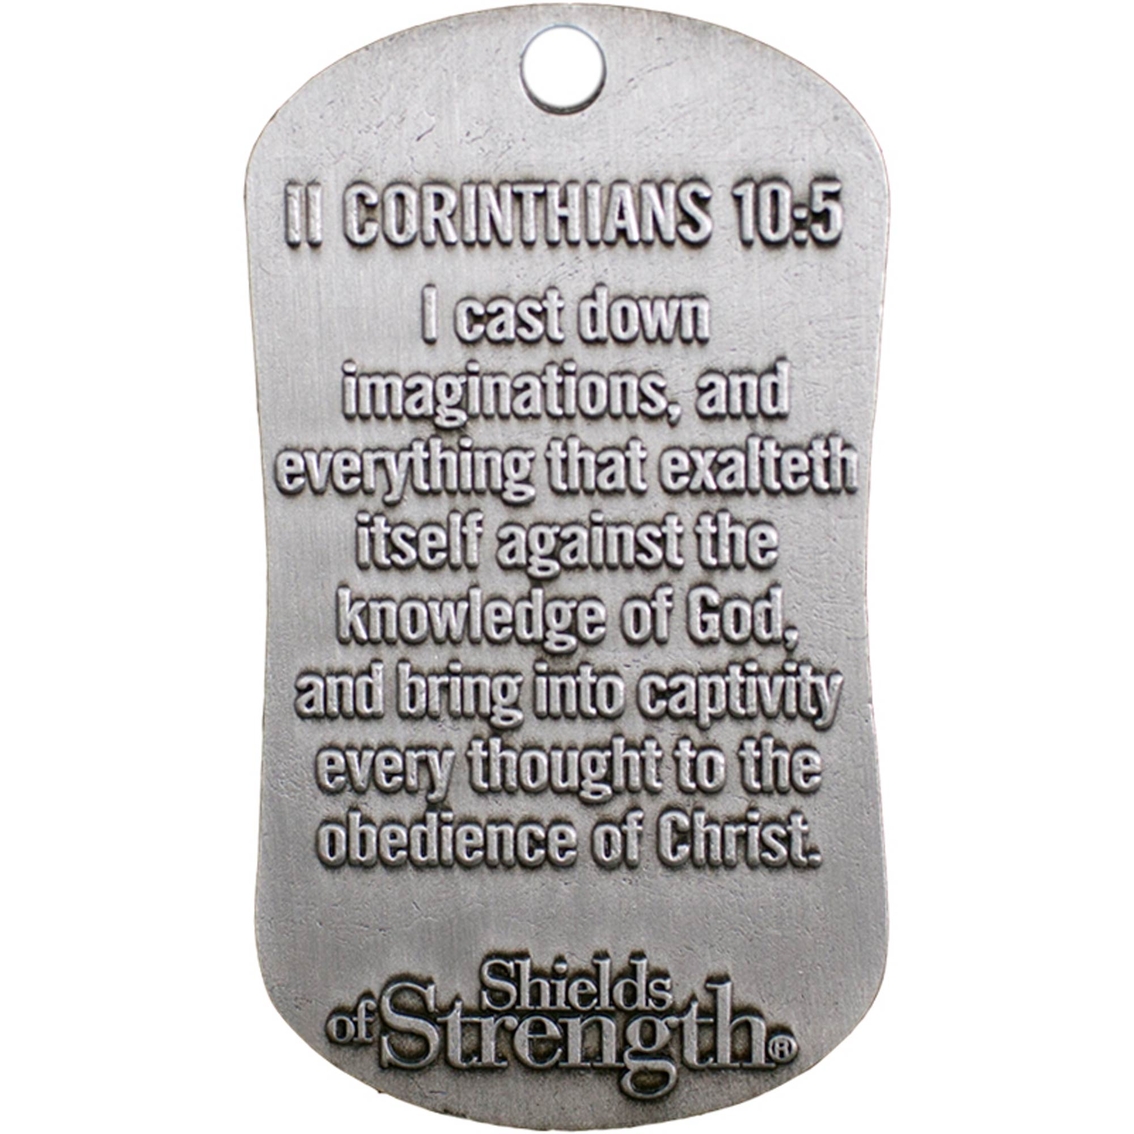 Shields of Strength Dog Tag Necklace, Jeremiah 29:11/ II Corinthians 10:5 - Image 2 of 2